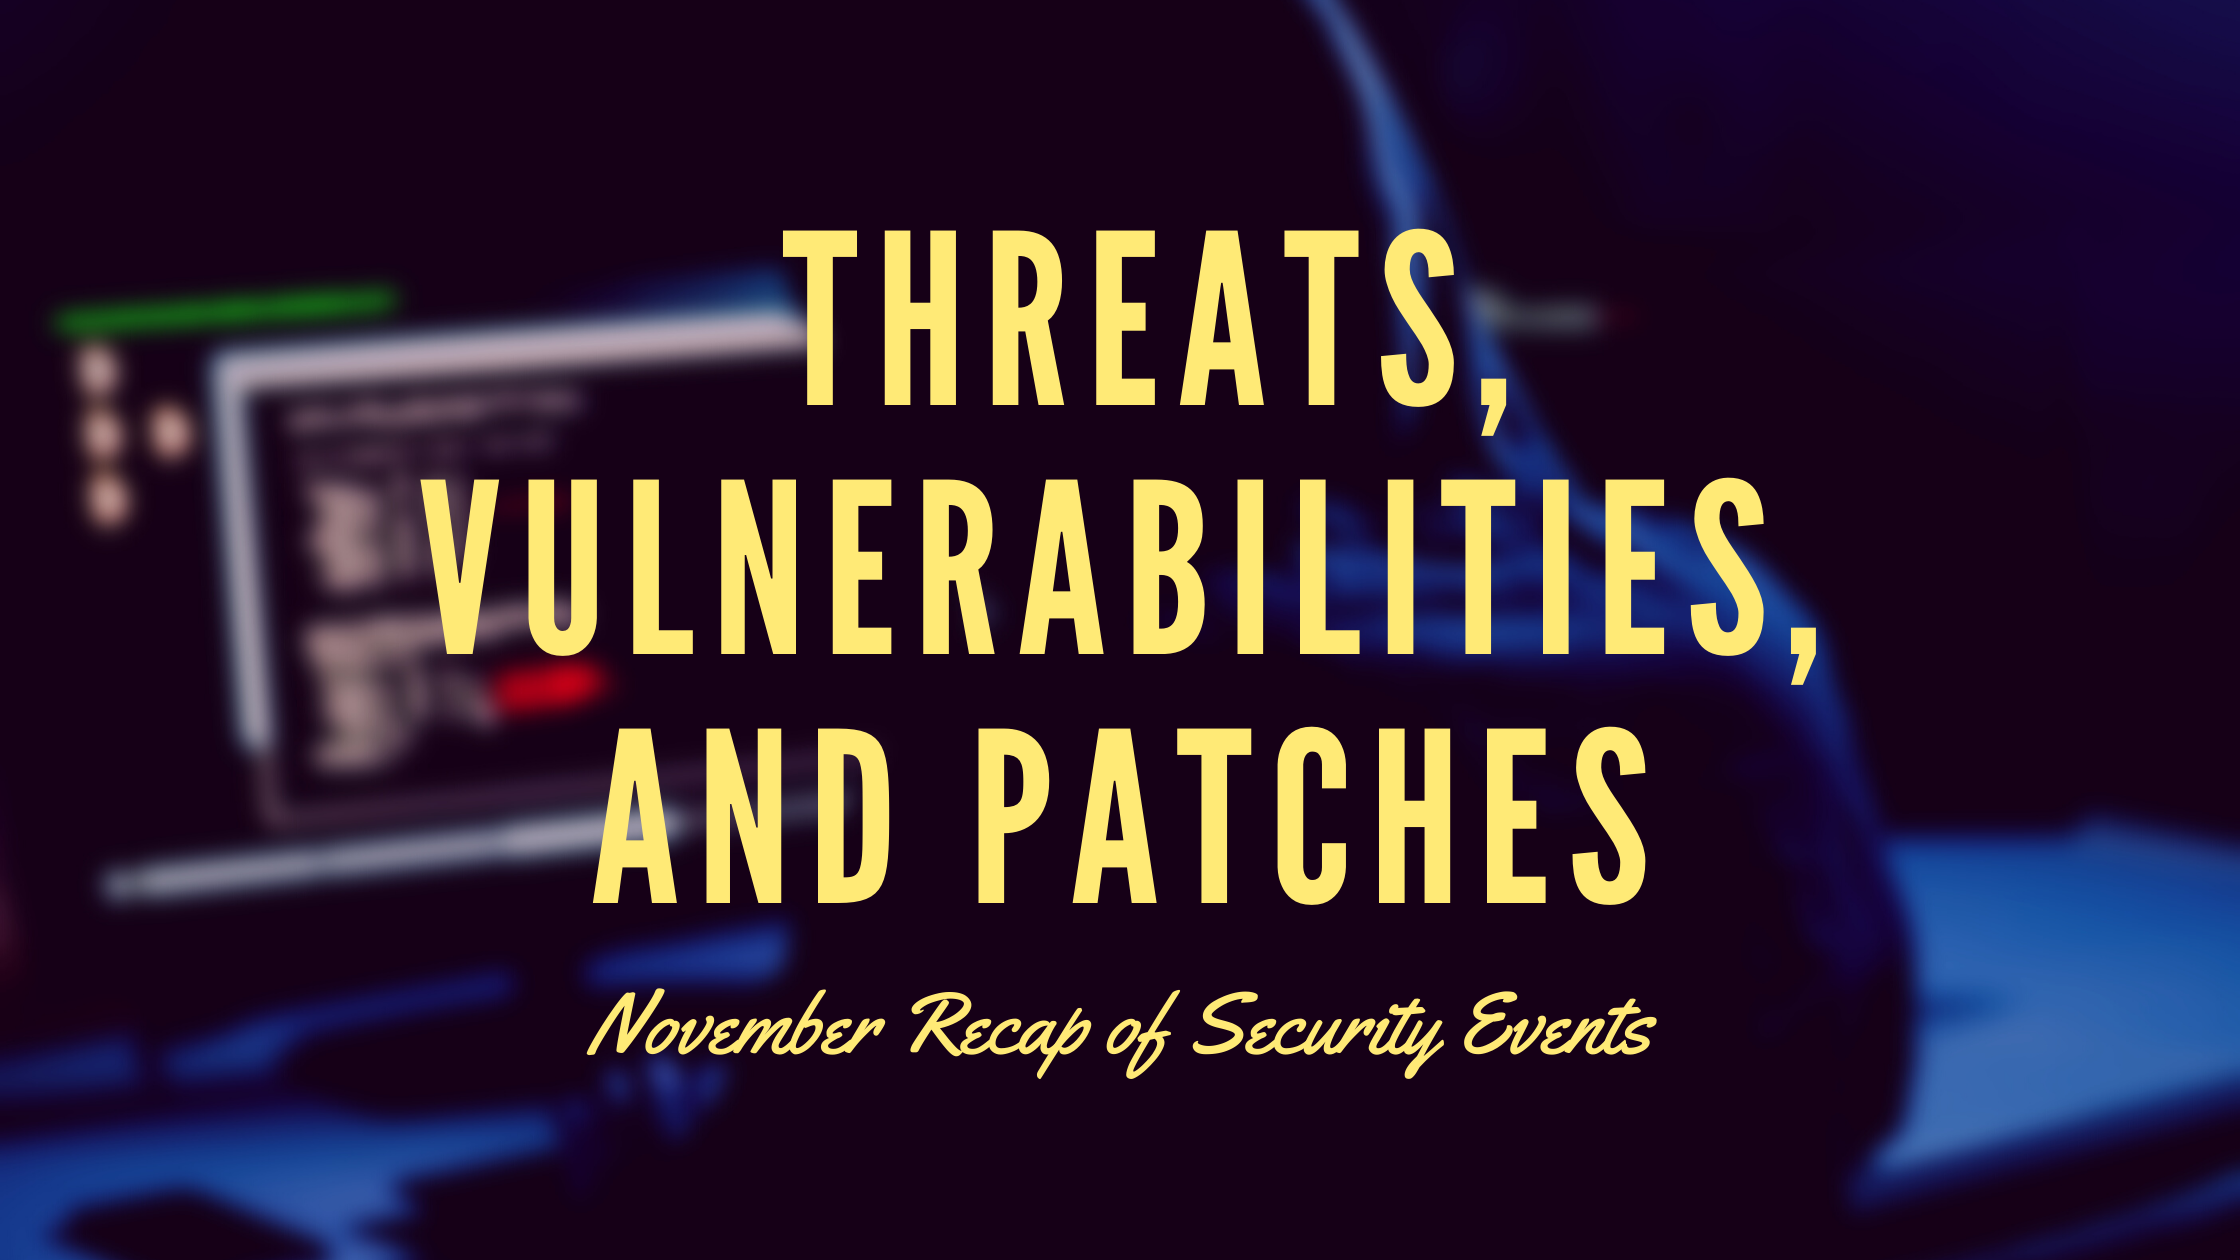 [Security Tip] November Cyber Security Threats Summarized